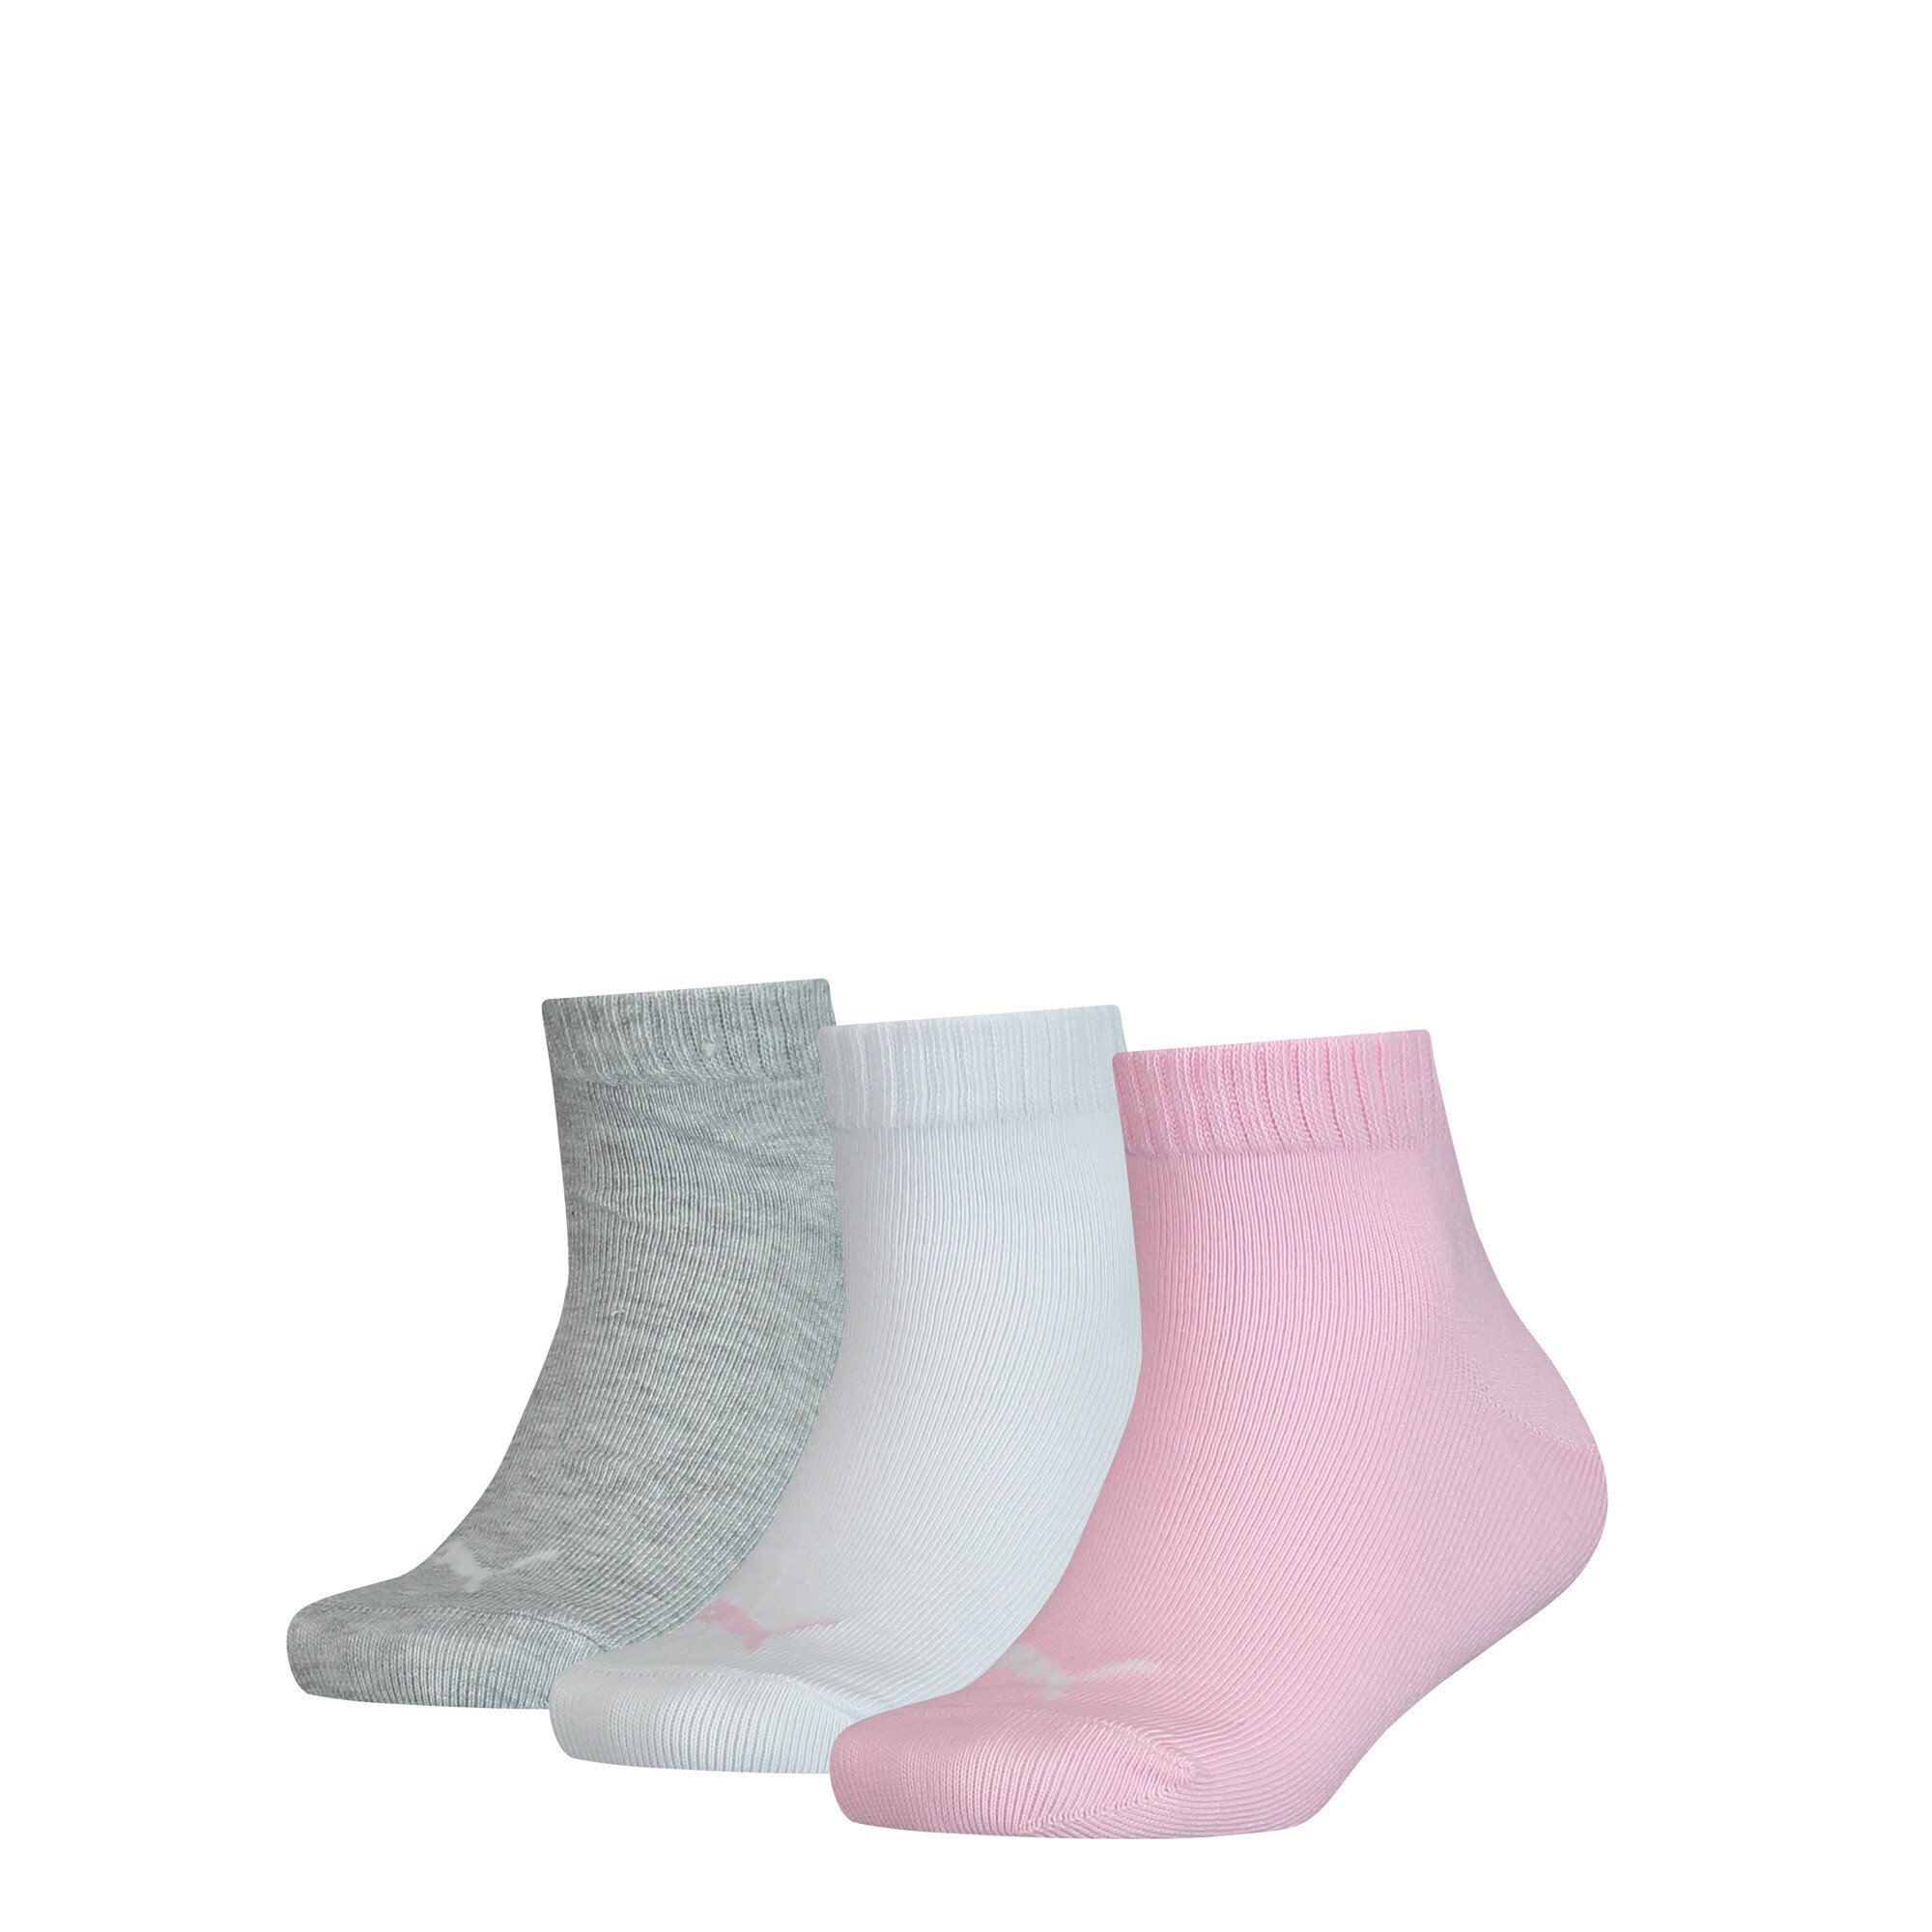 Kids' PUMA Quarter Socks 3 Pack In 70 - Pink, Size 23-26